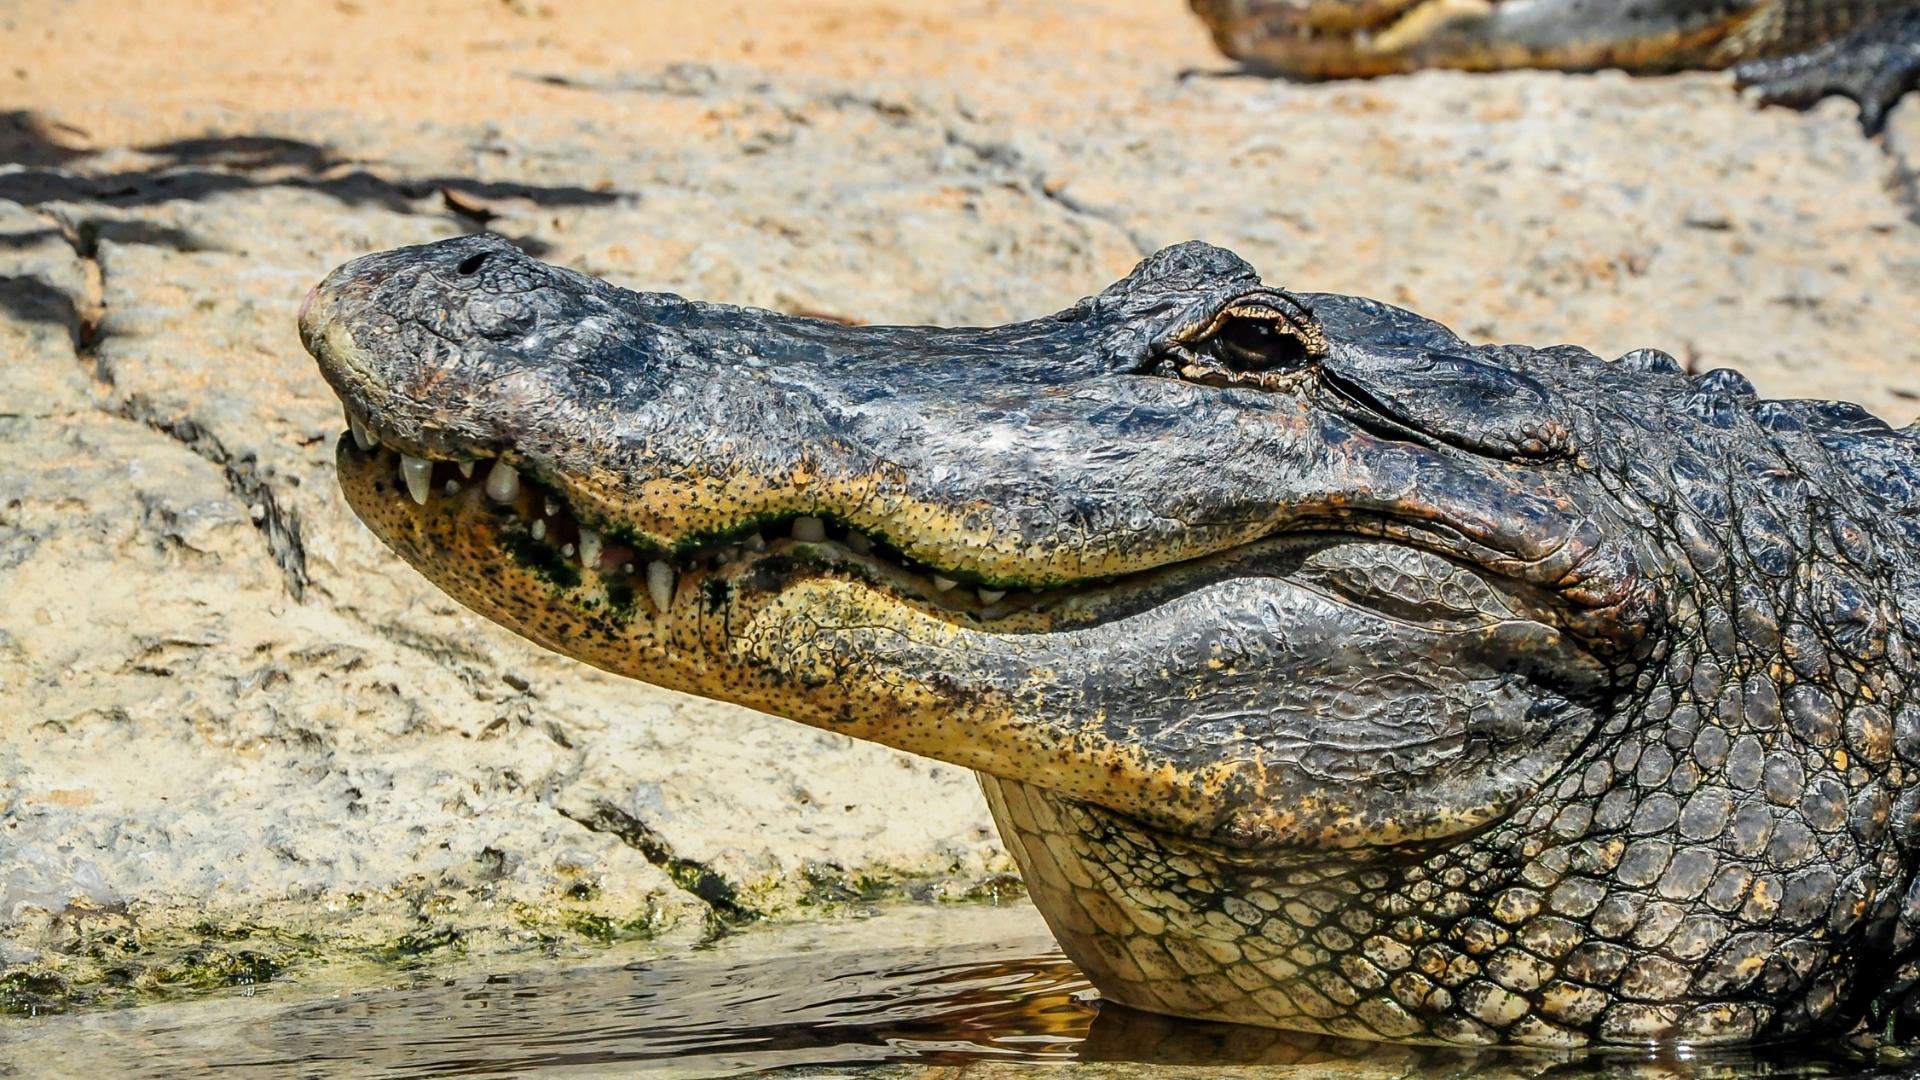 Gatorland in Orlando Florida Alligator - 10